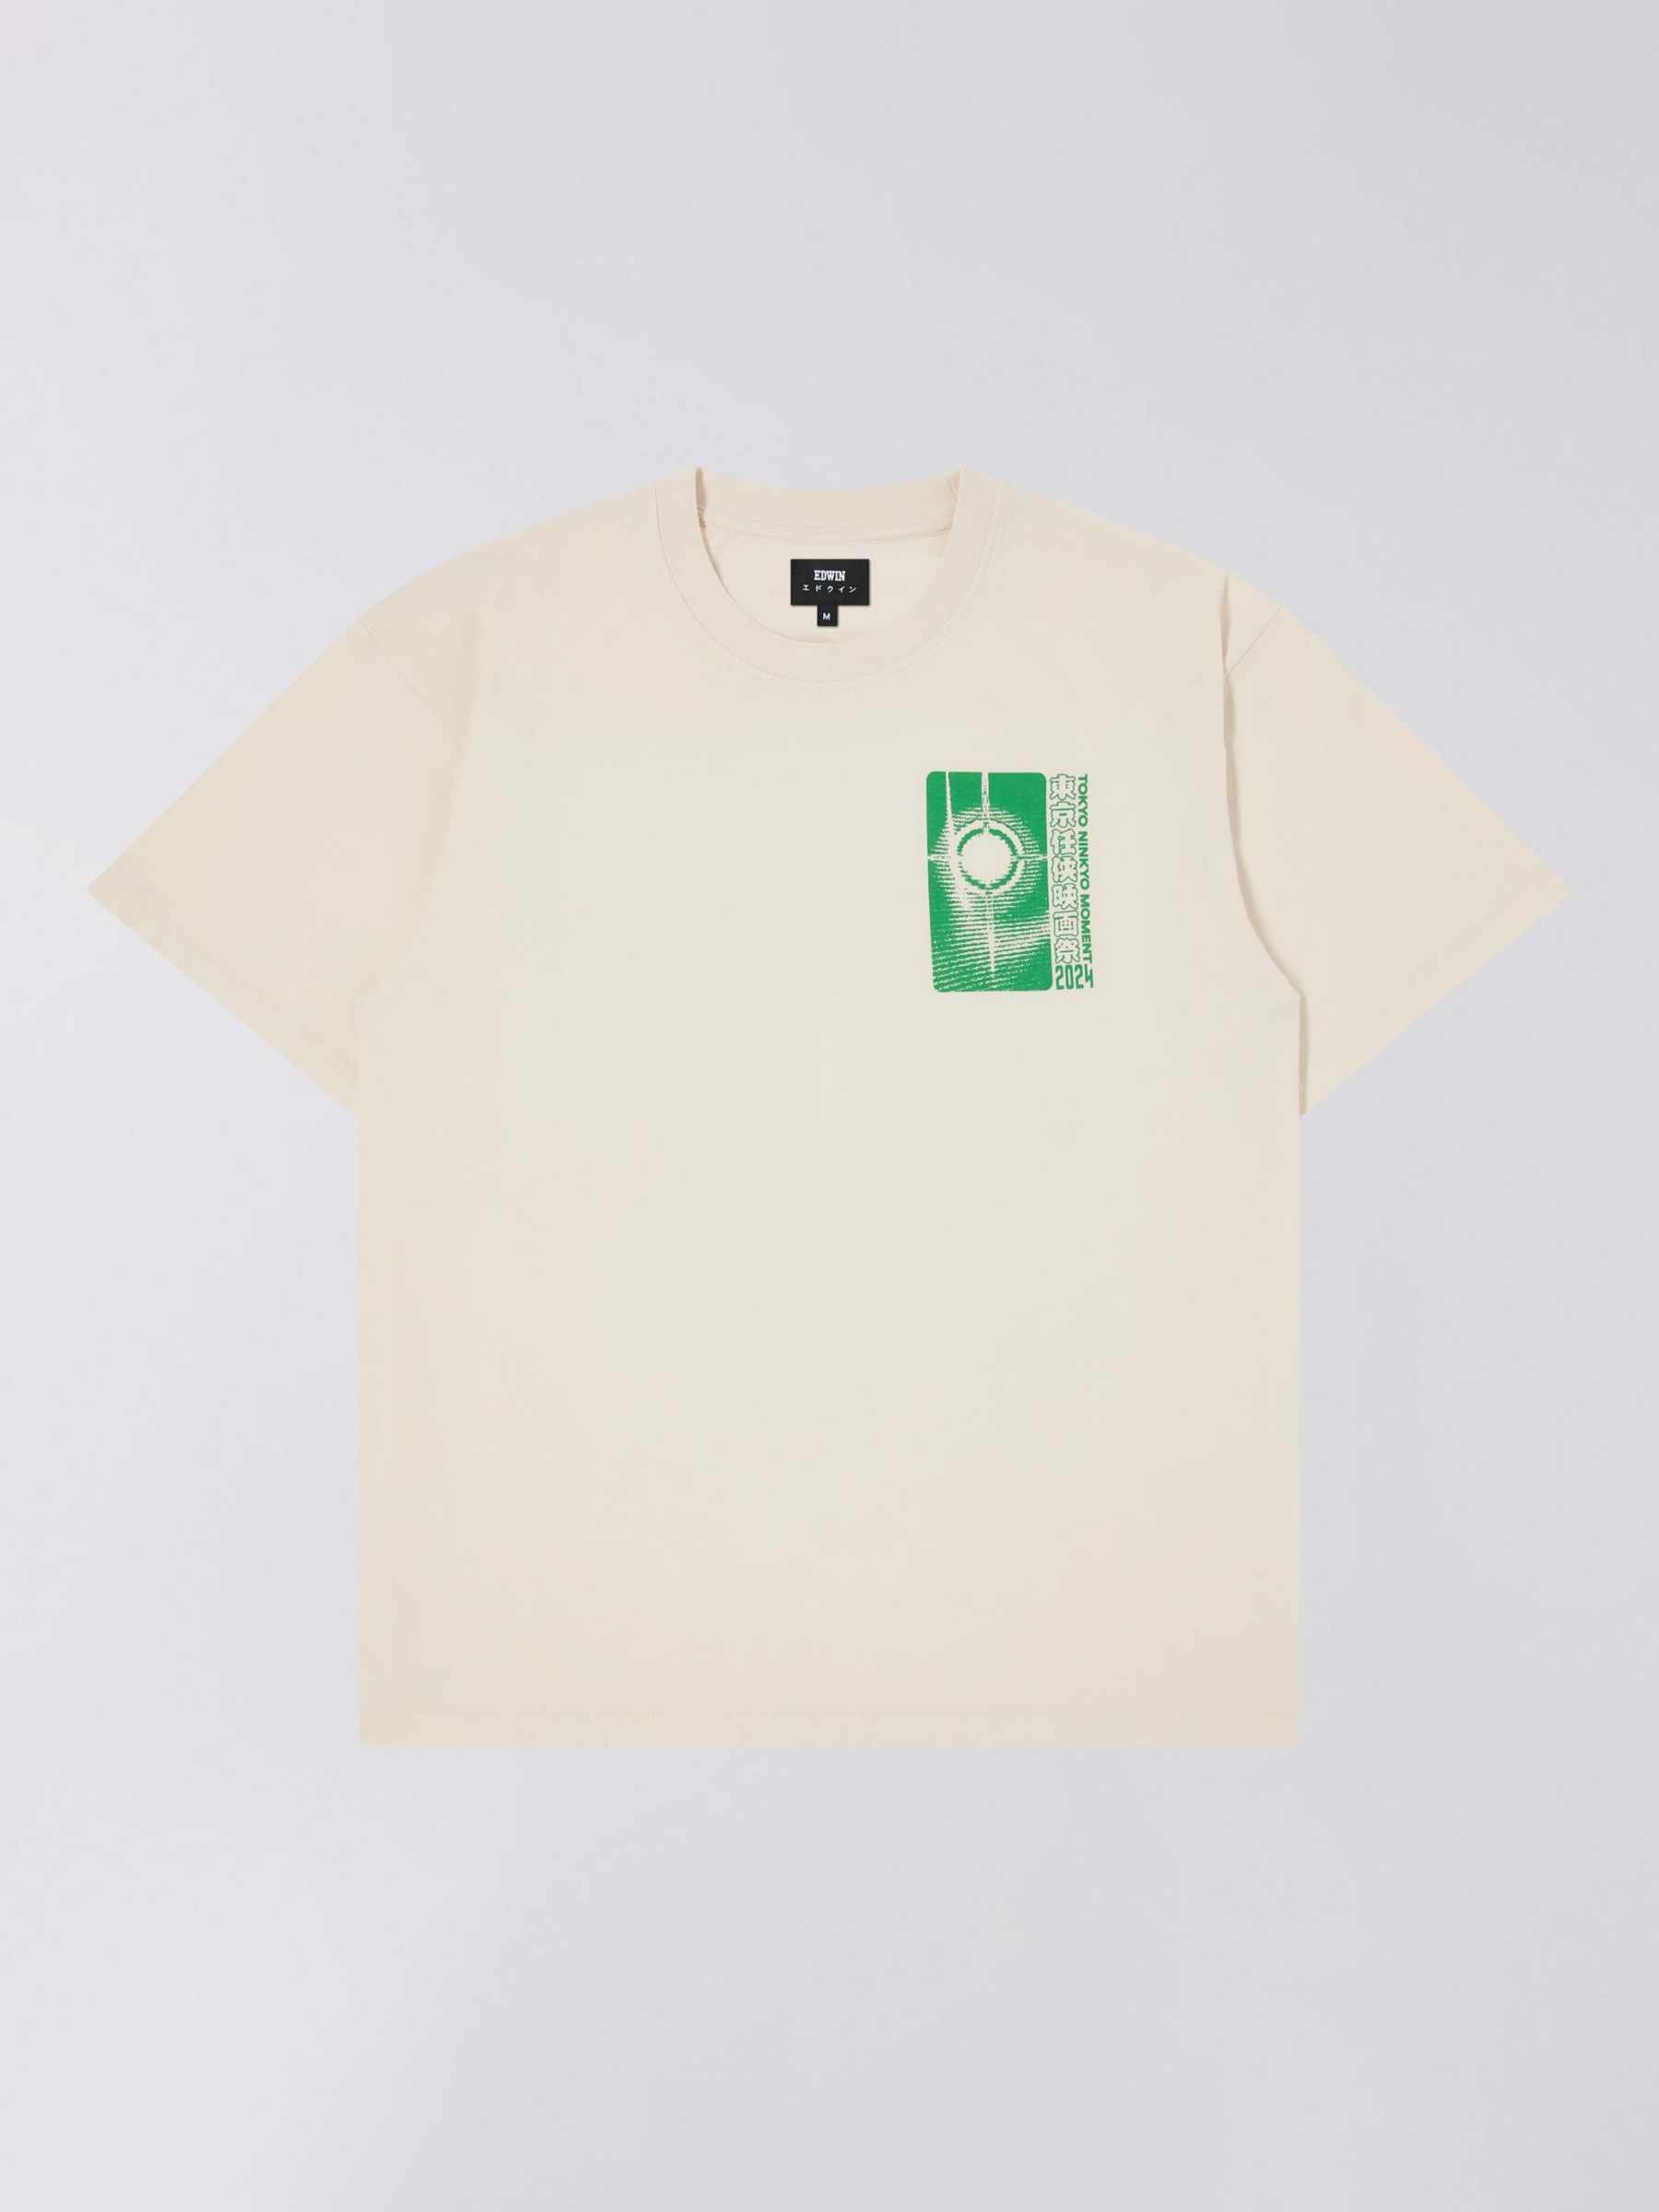 Edwin Tokyo Ninkyo Oversized T-Shirt, Whisper White/Green, M